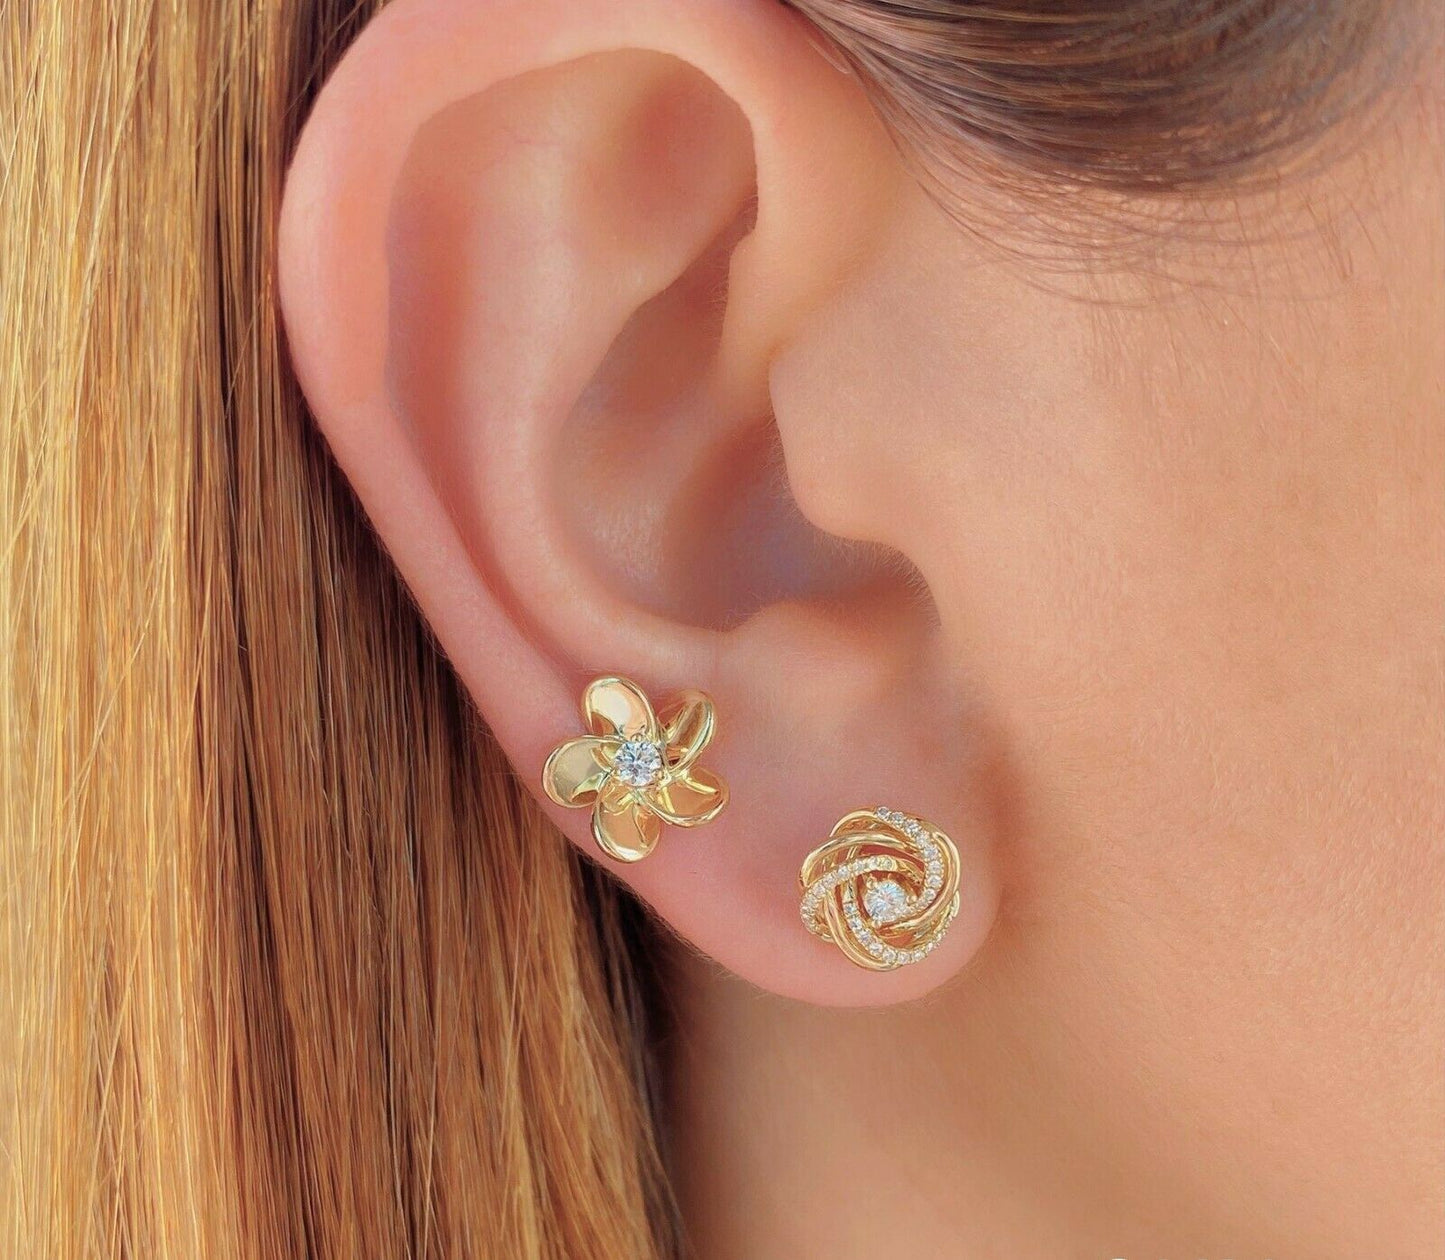 14K Gold 0.16CT Diamond Flower Stud Earrings Round Cut Natural Petals